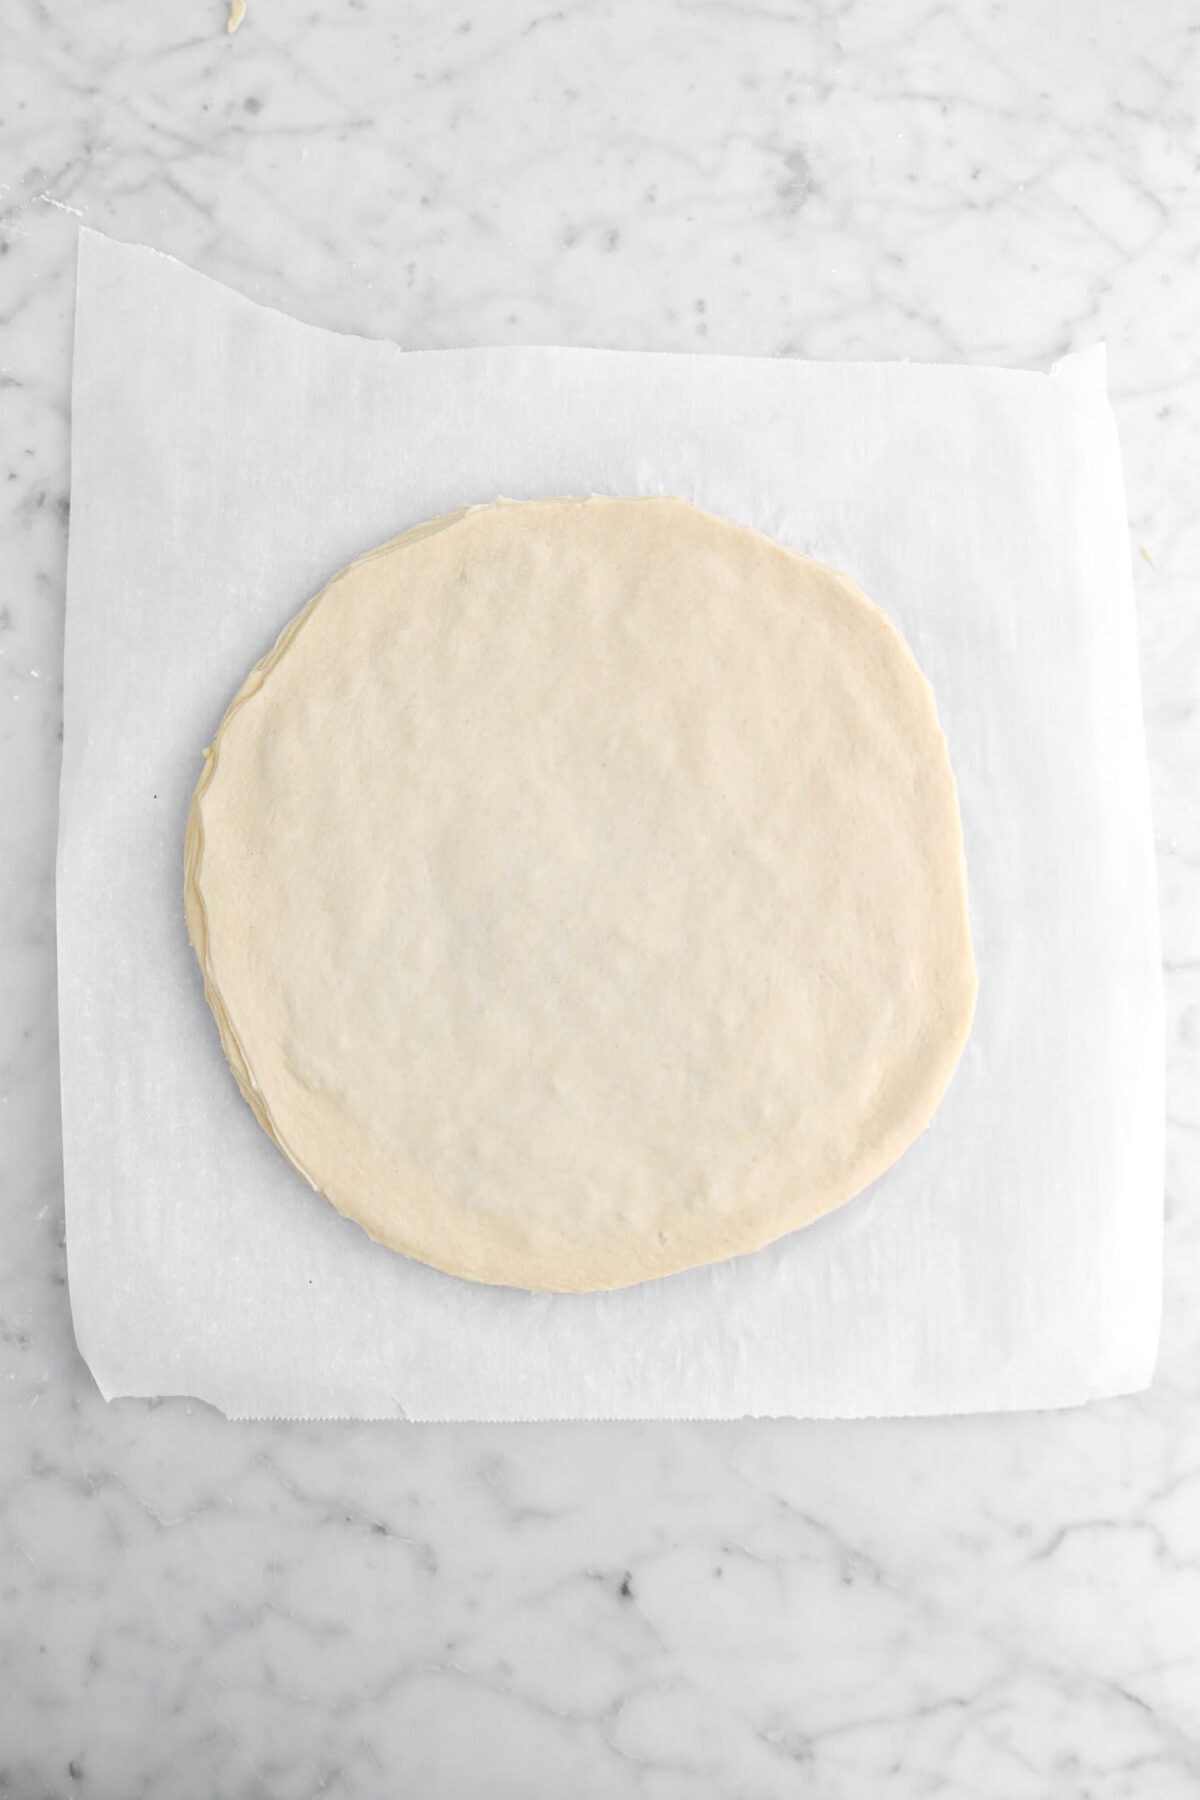 round circle of dough laid over pesto layer.